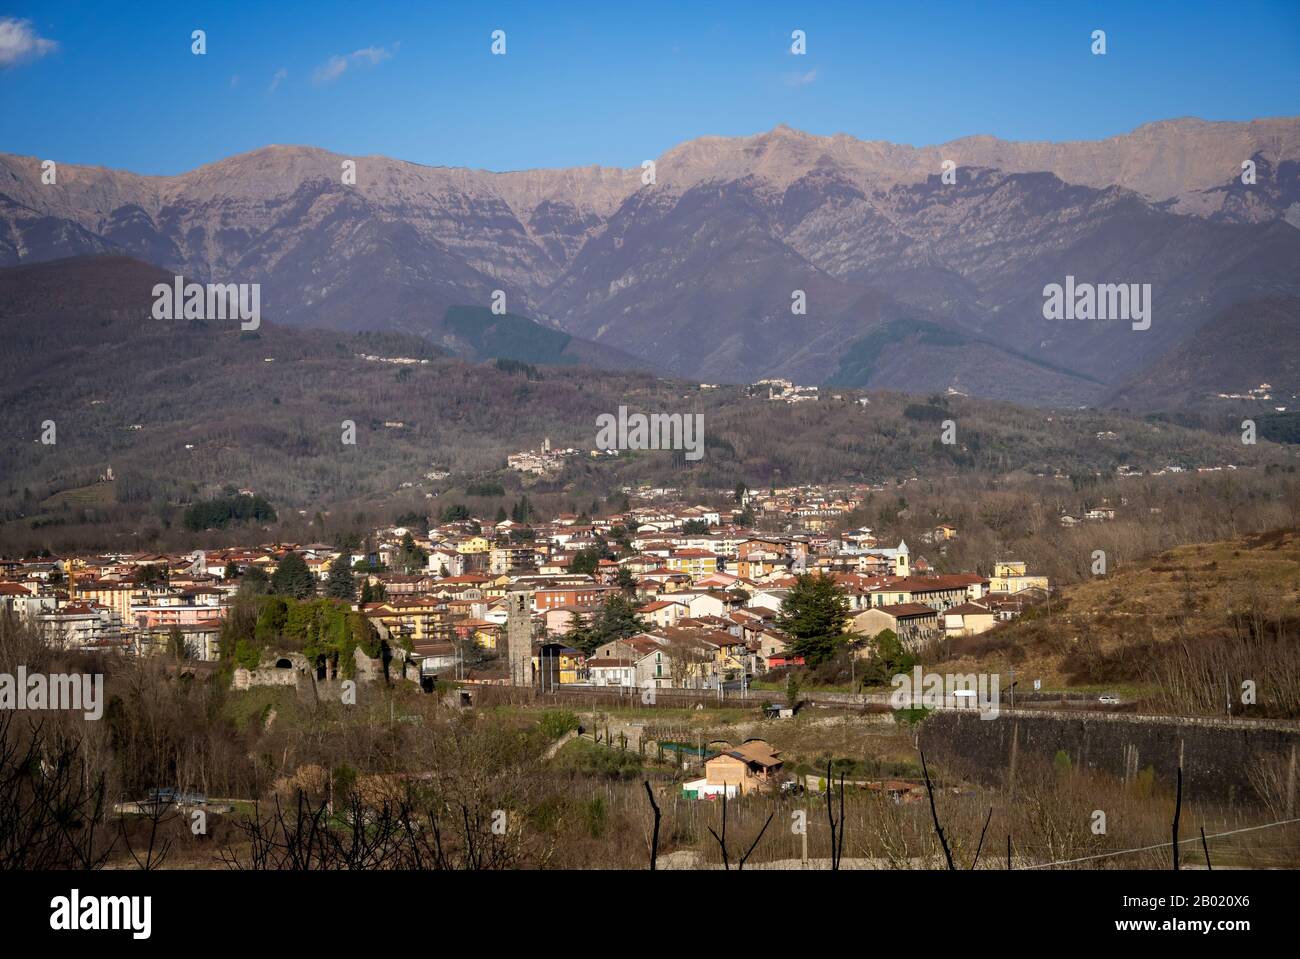 Blick auf Villafranca in Lunigayana, Nordtoskanei, Italien. Mit apennin-bergen dahinter. Burgruinen sichtbar. Stockfoto